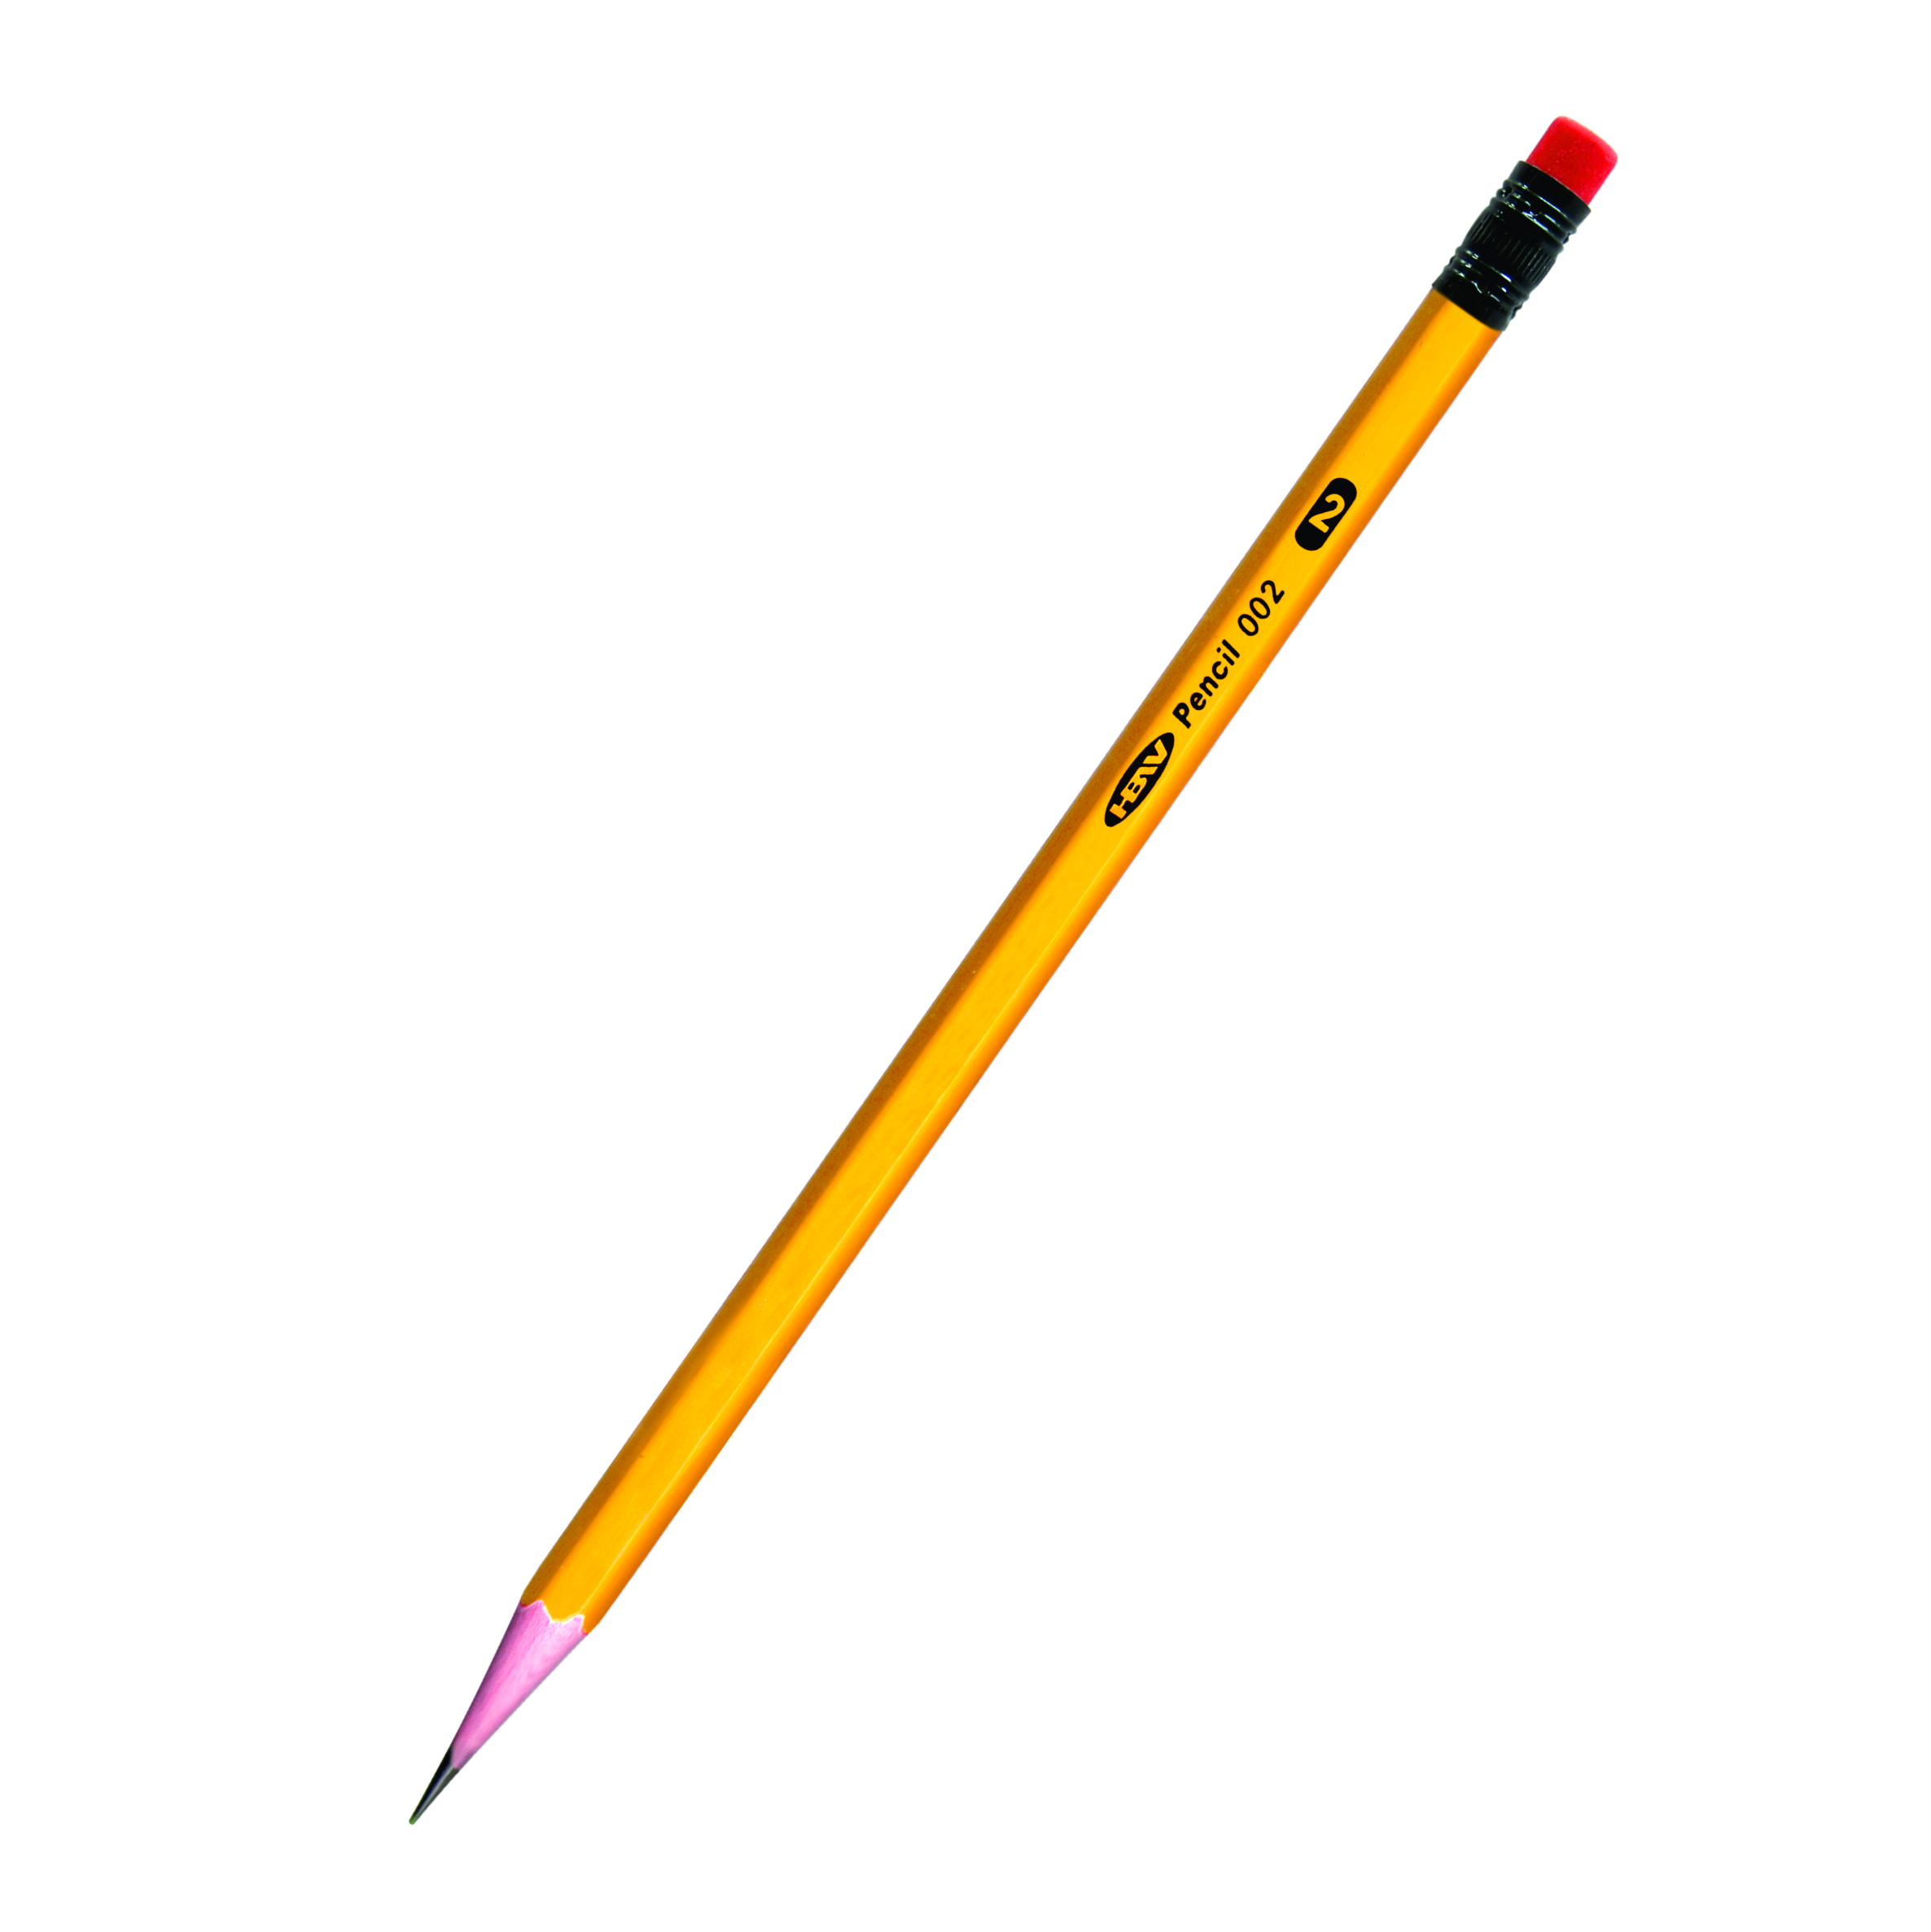 HBW Yellow Pencil 2-HB - HBW